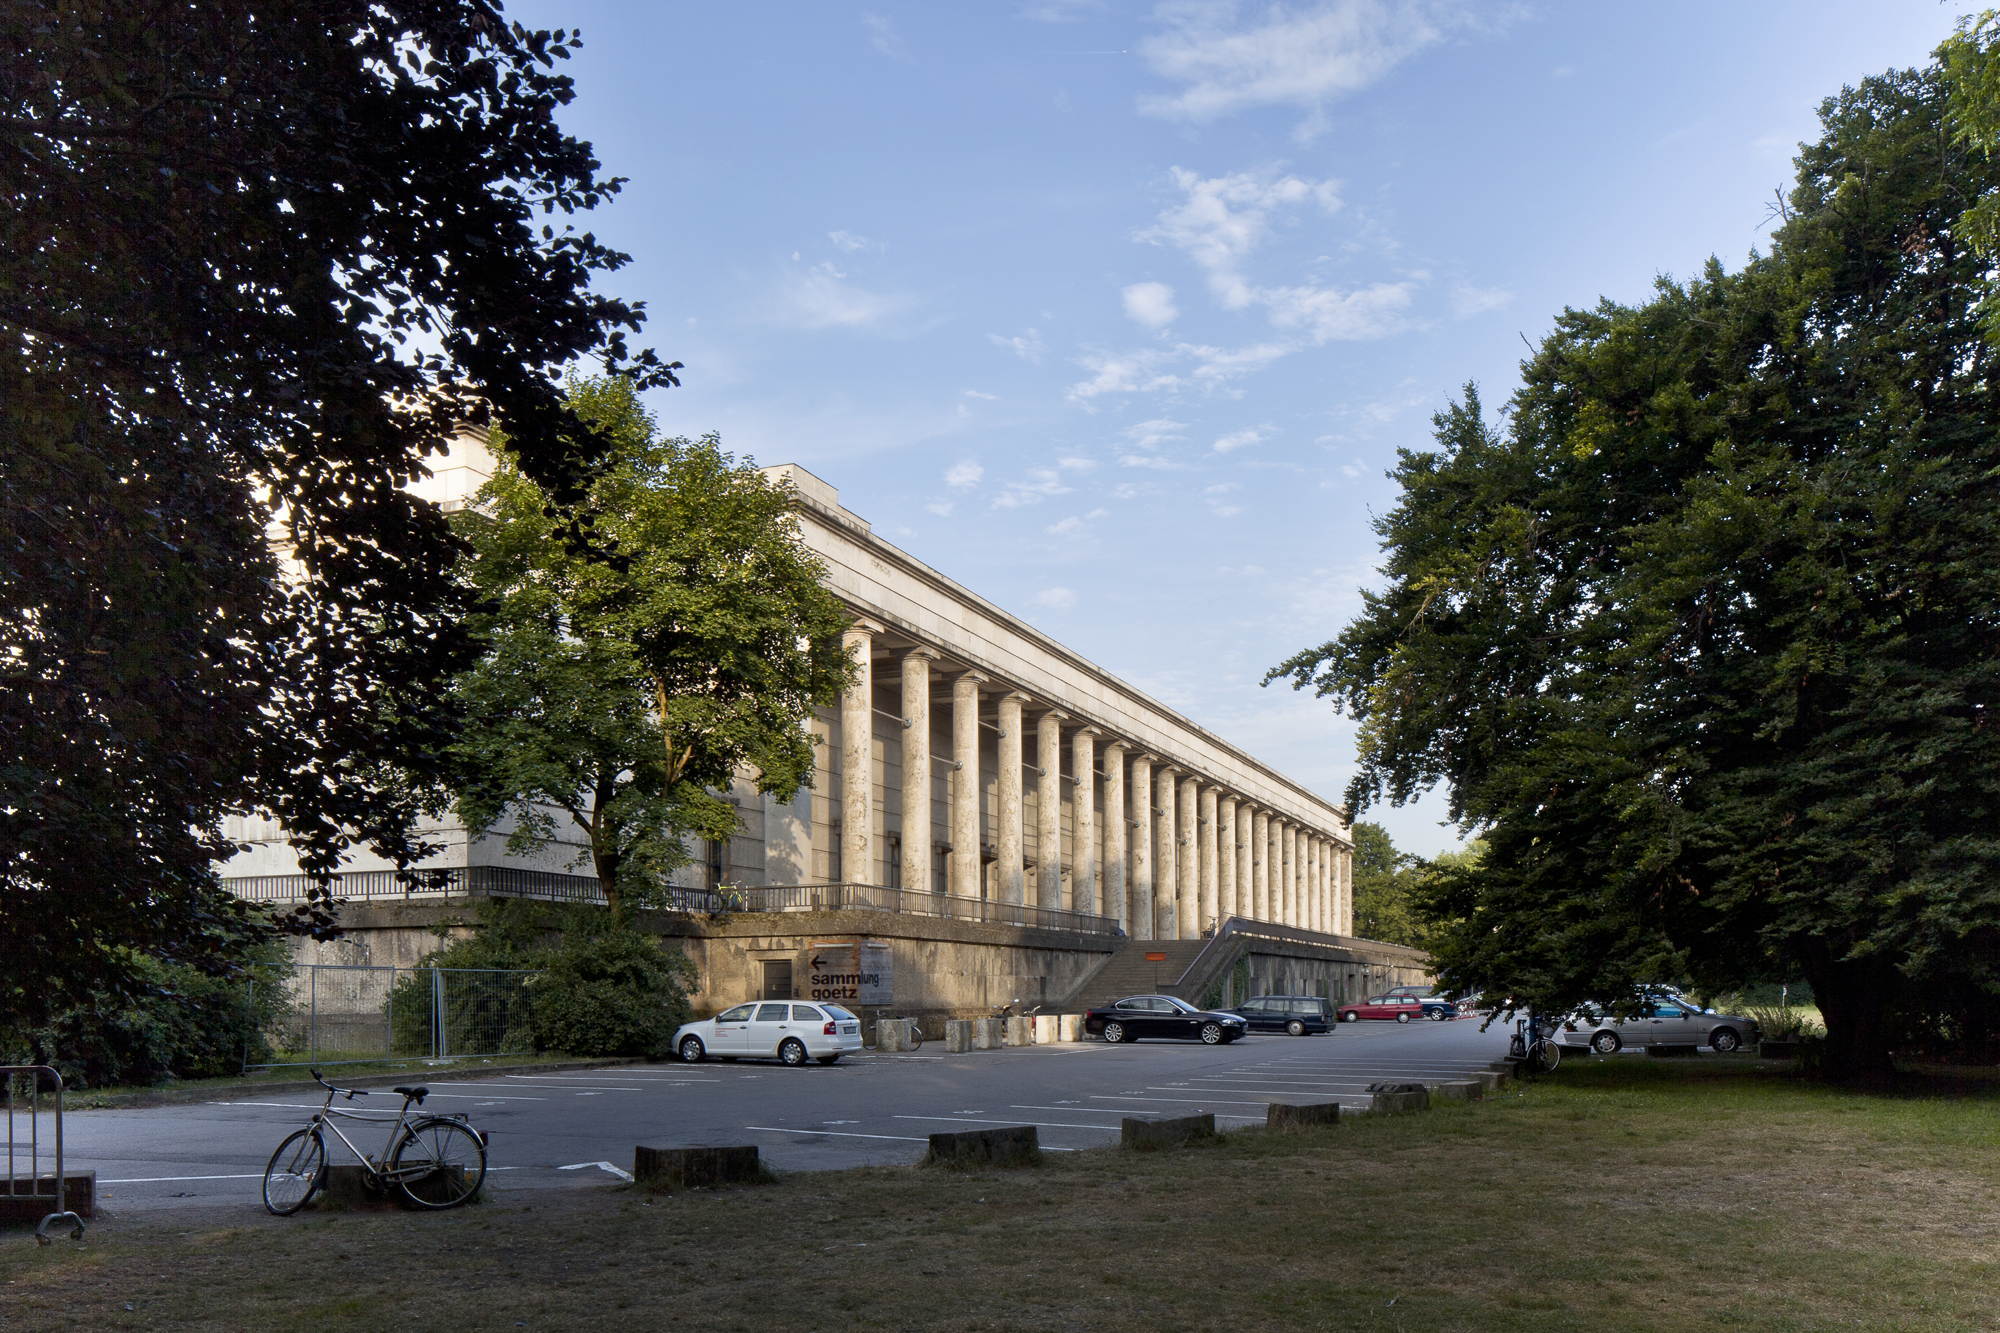 Haus der Kunst by David Chipperfield Architects, first